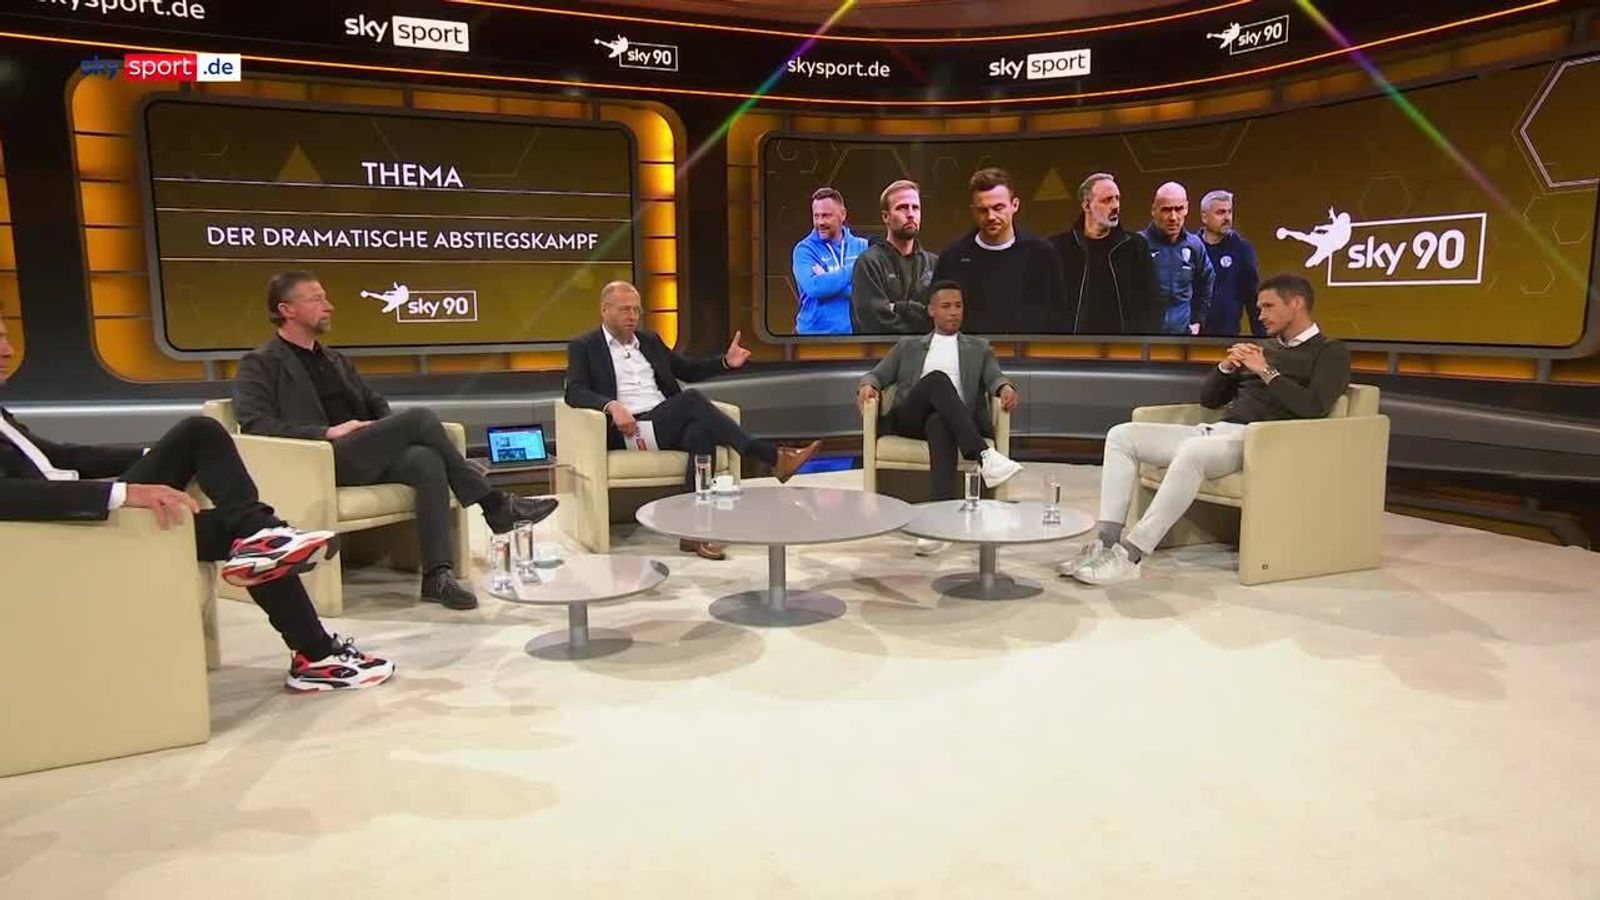 Bundesliga Kehl und Aogo diskutieren bei Sky90 um Panenka-Elfmeter Fußball News Sky Sport